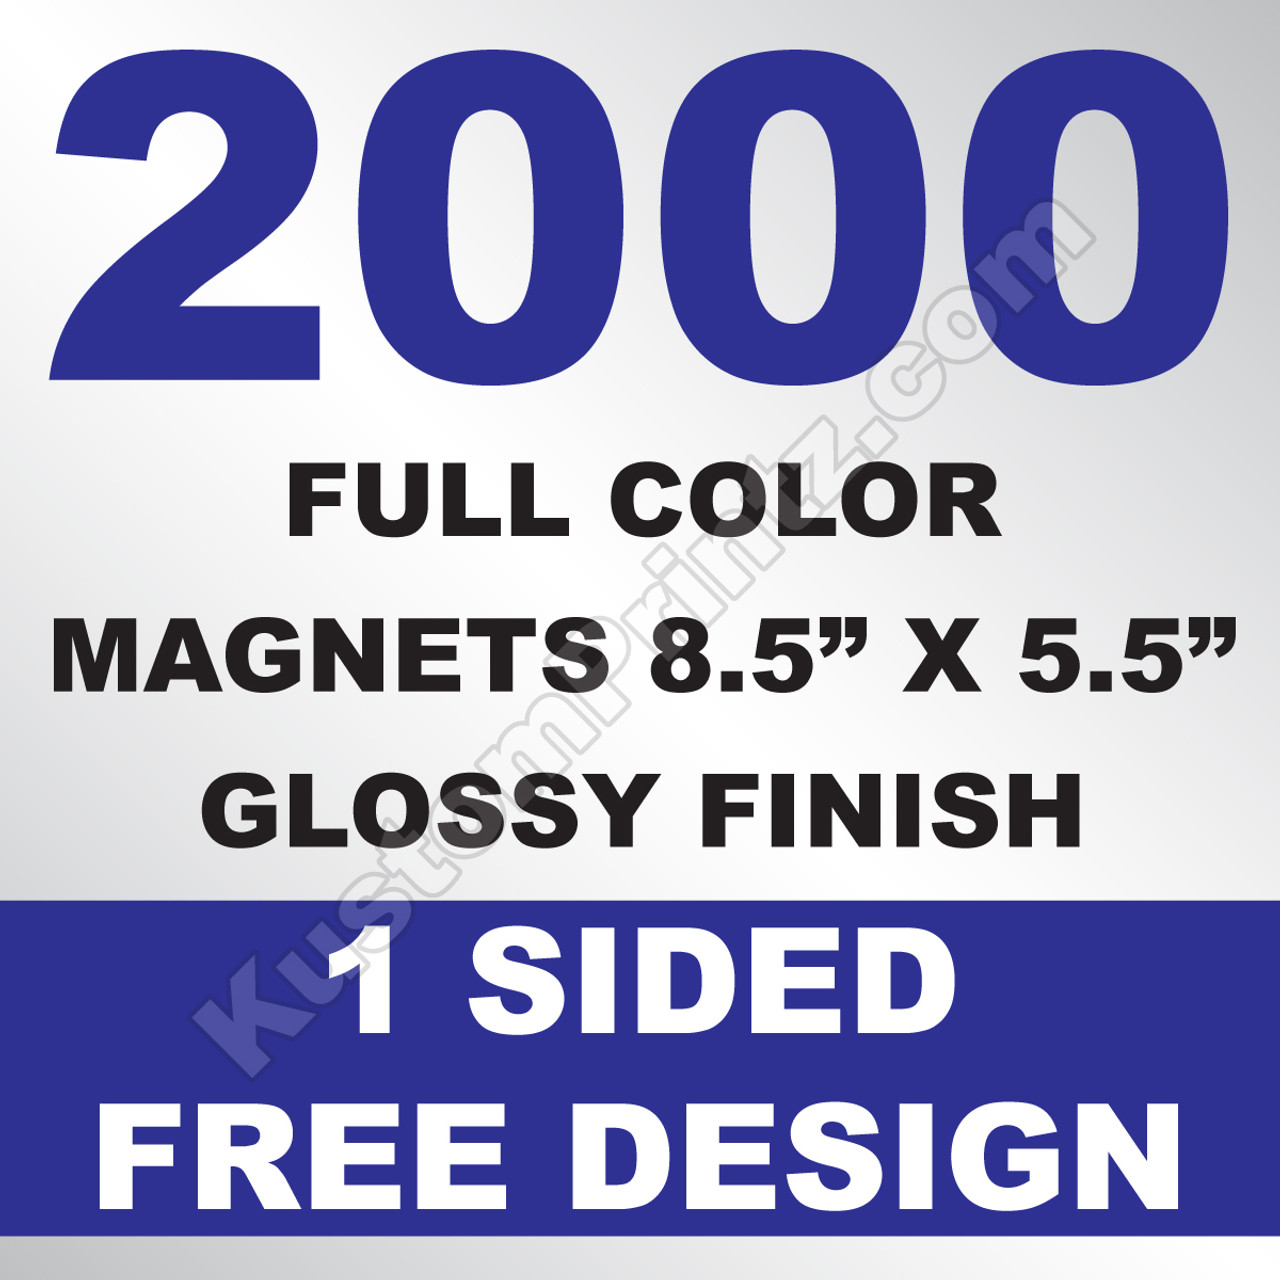 2000 Magnets 8.5x5.5